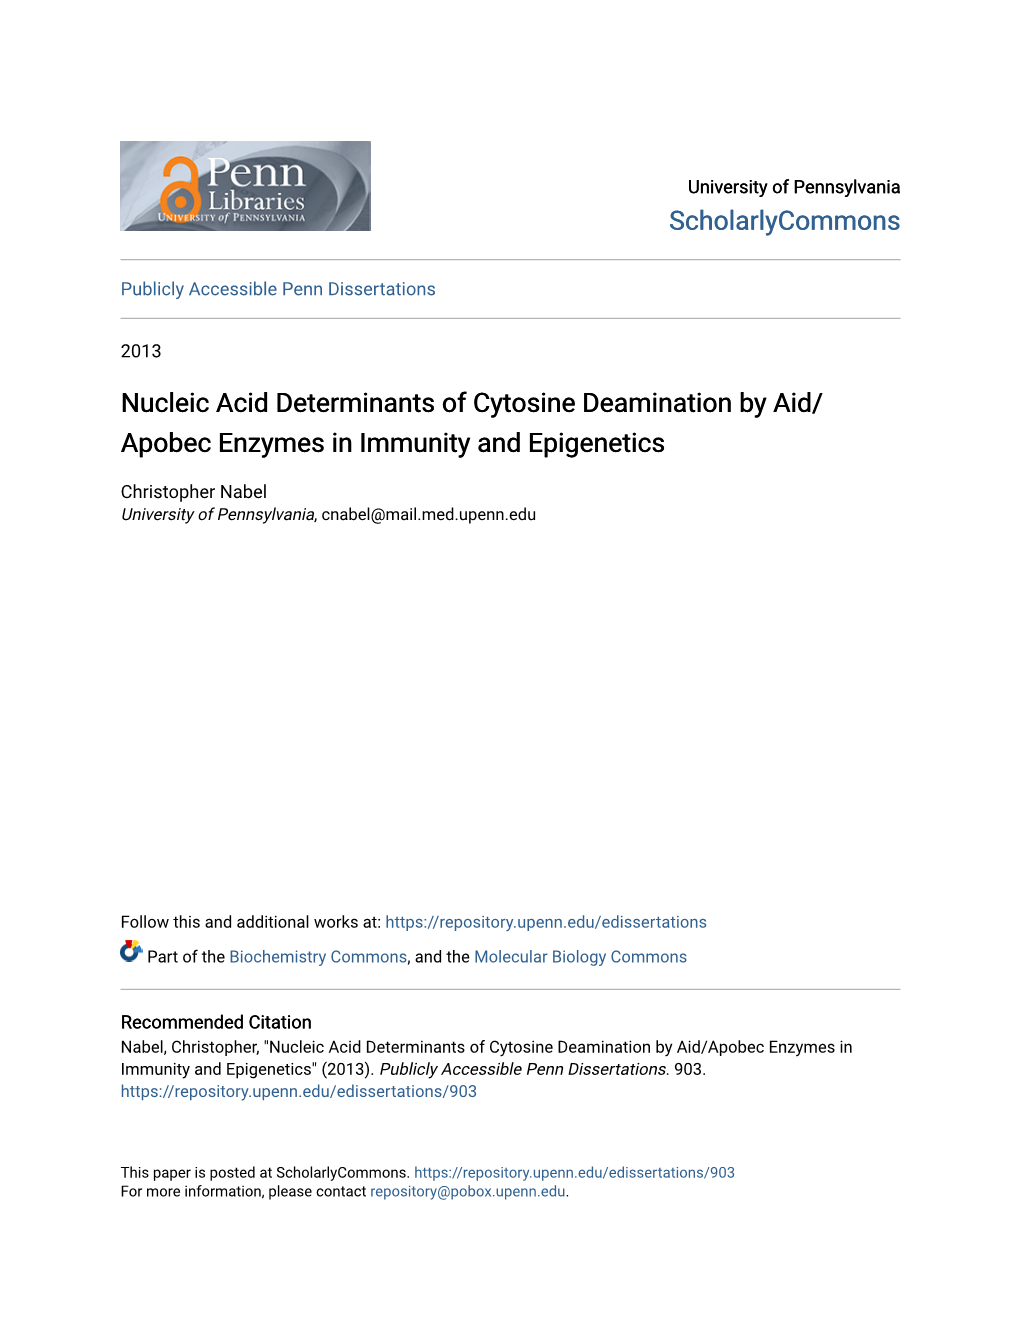 Nucleic Acid Determinants of Cytosine Deamination by Aid/Apobec Enzymes in Immunity and Epigenetics" (2013)